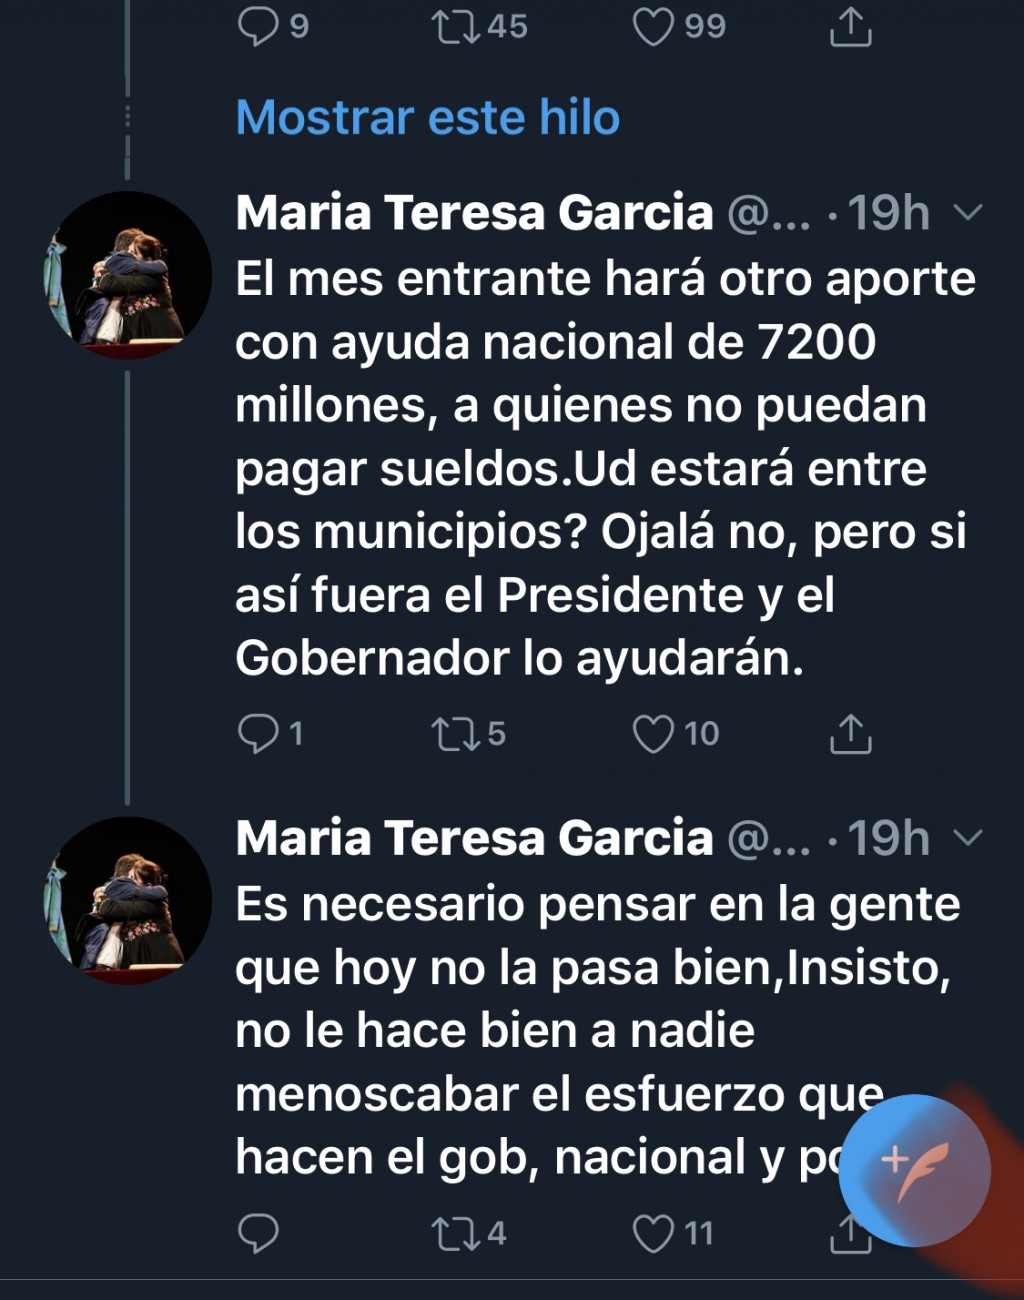 TERESA GARCÍA CRUZÓ FUERTE A POSSE EN LAS REDES SOCIALES